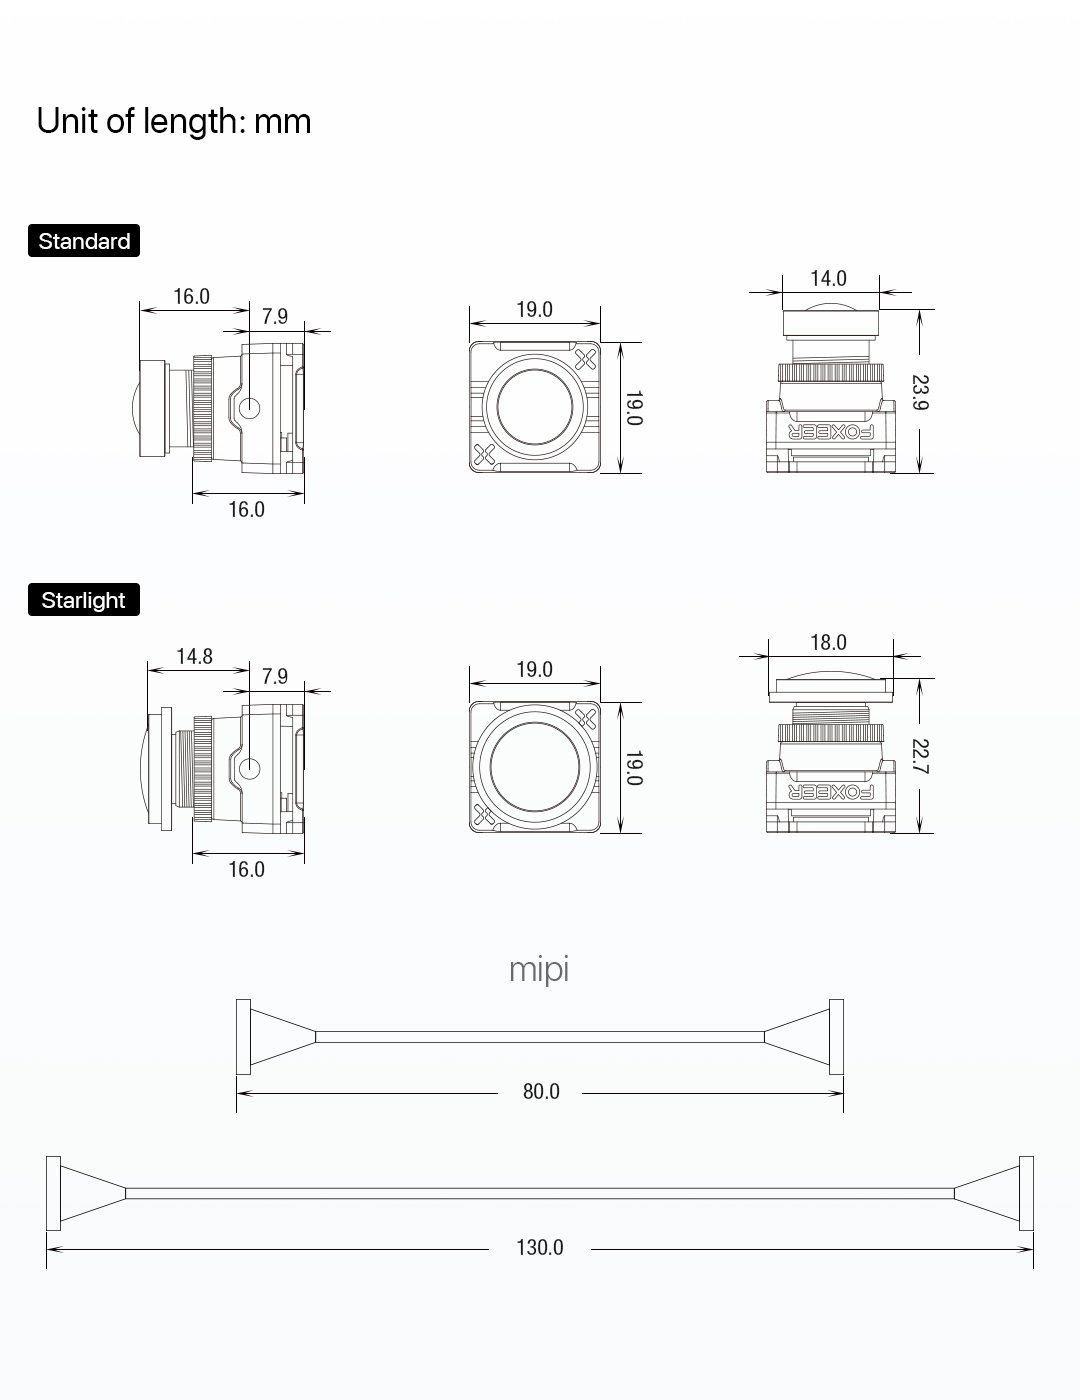 Foxeer Apollo Digital FPV MIPI Camera (Compatible with DJI Vista) - Starlight Lens 9